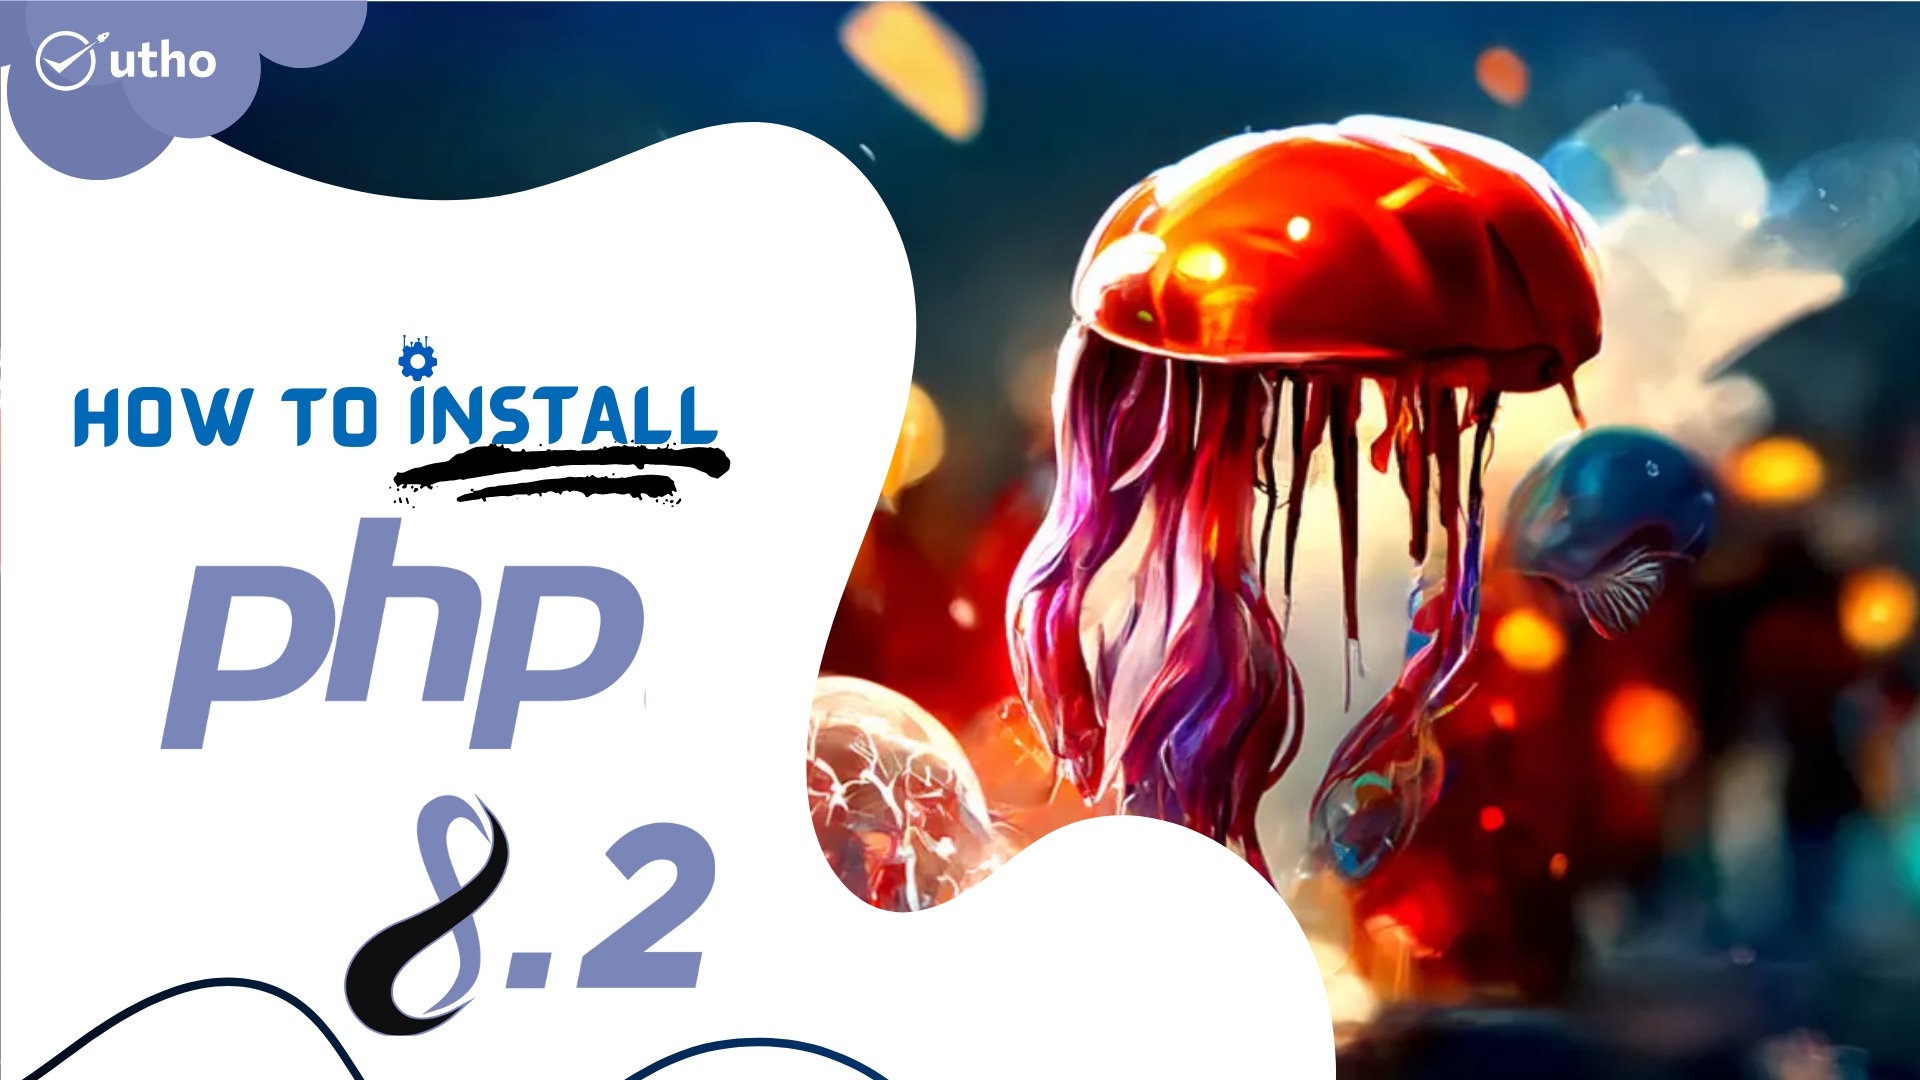 How to install PHP 8.2 on Ubuntu 22.04